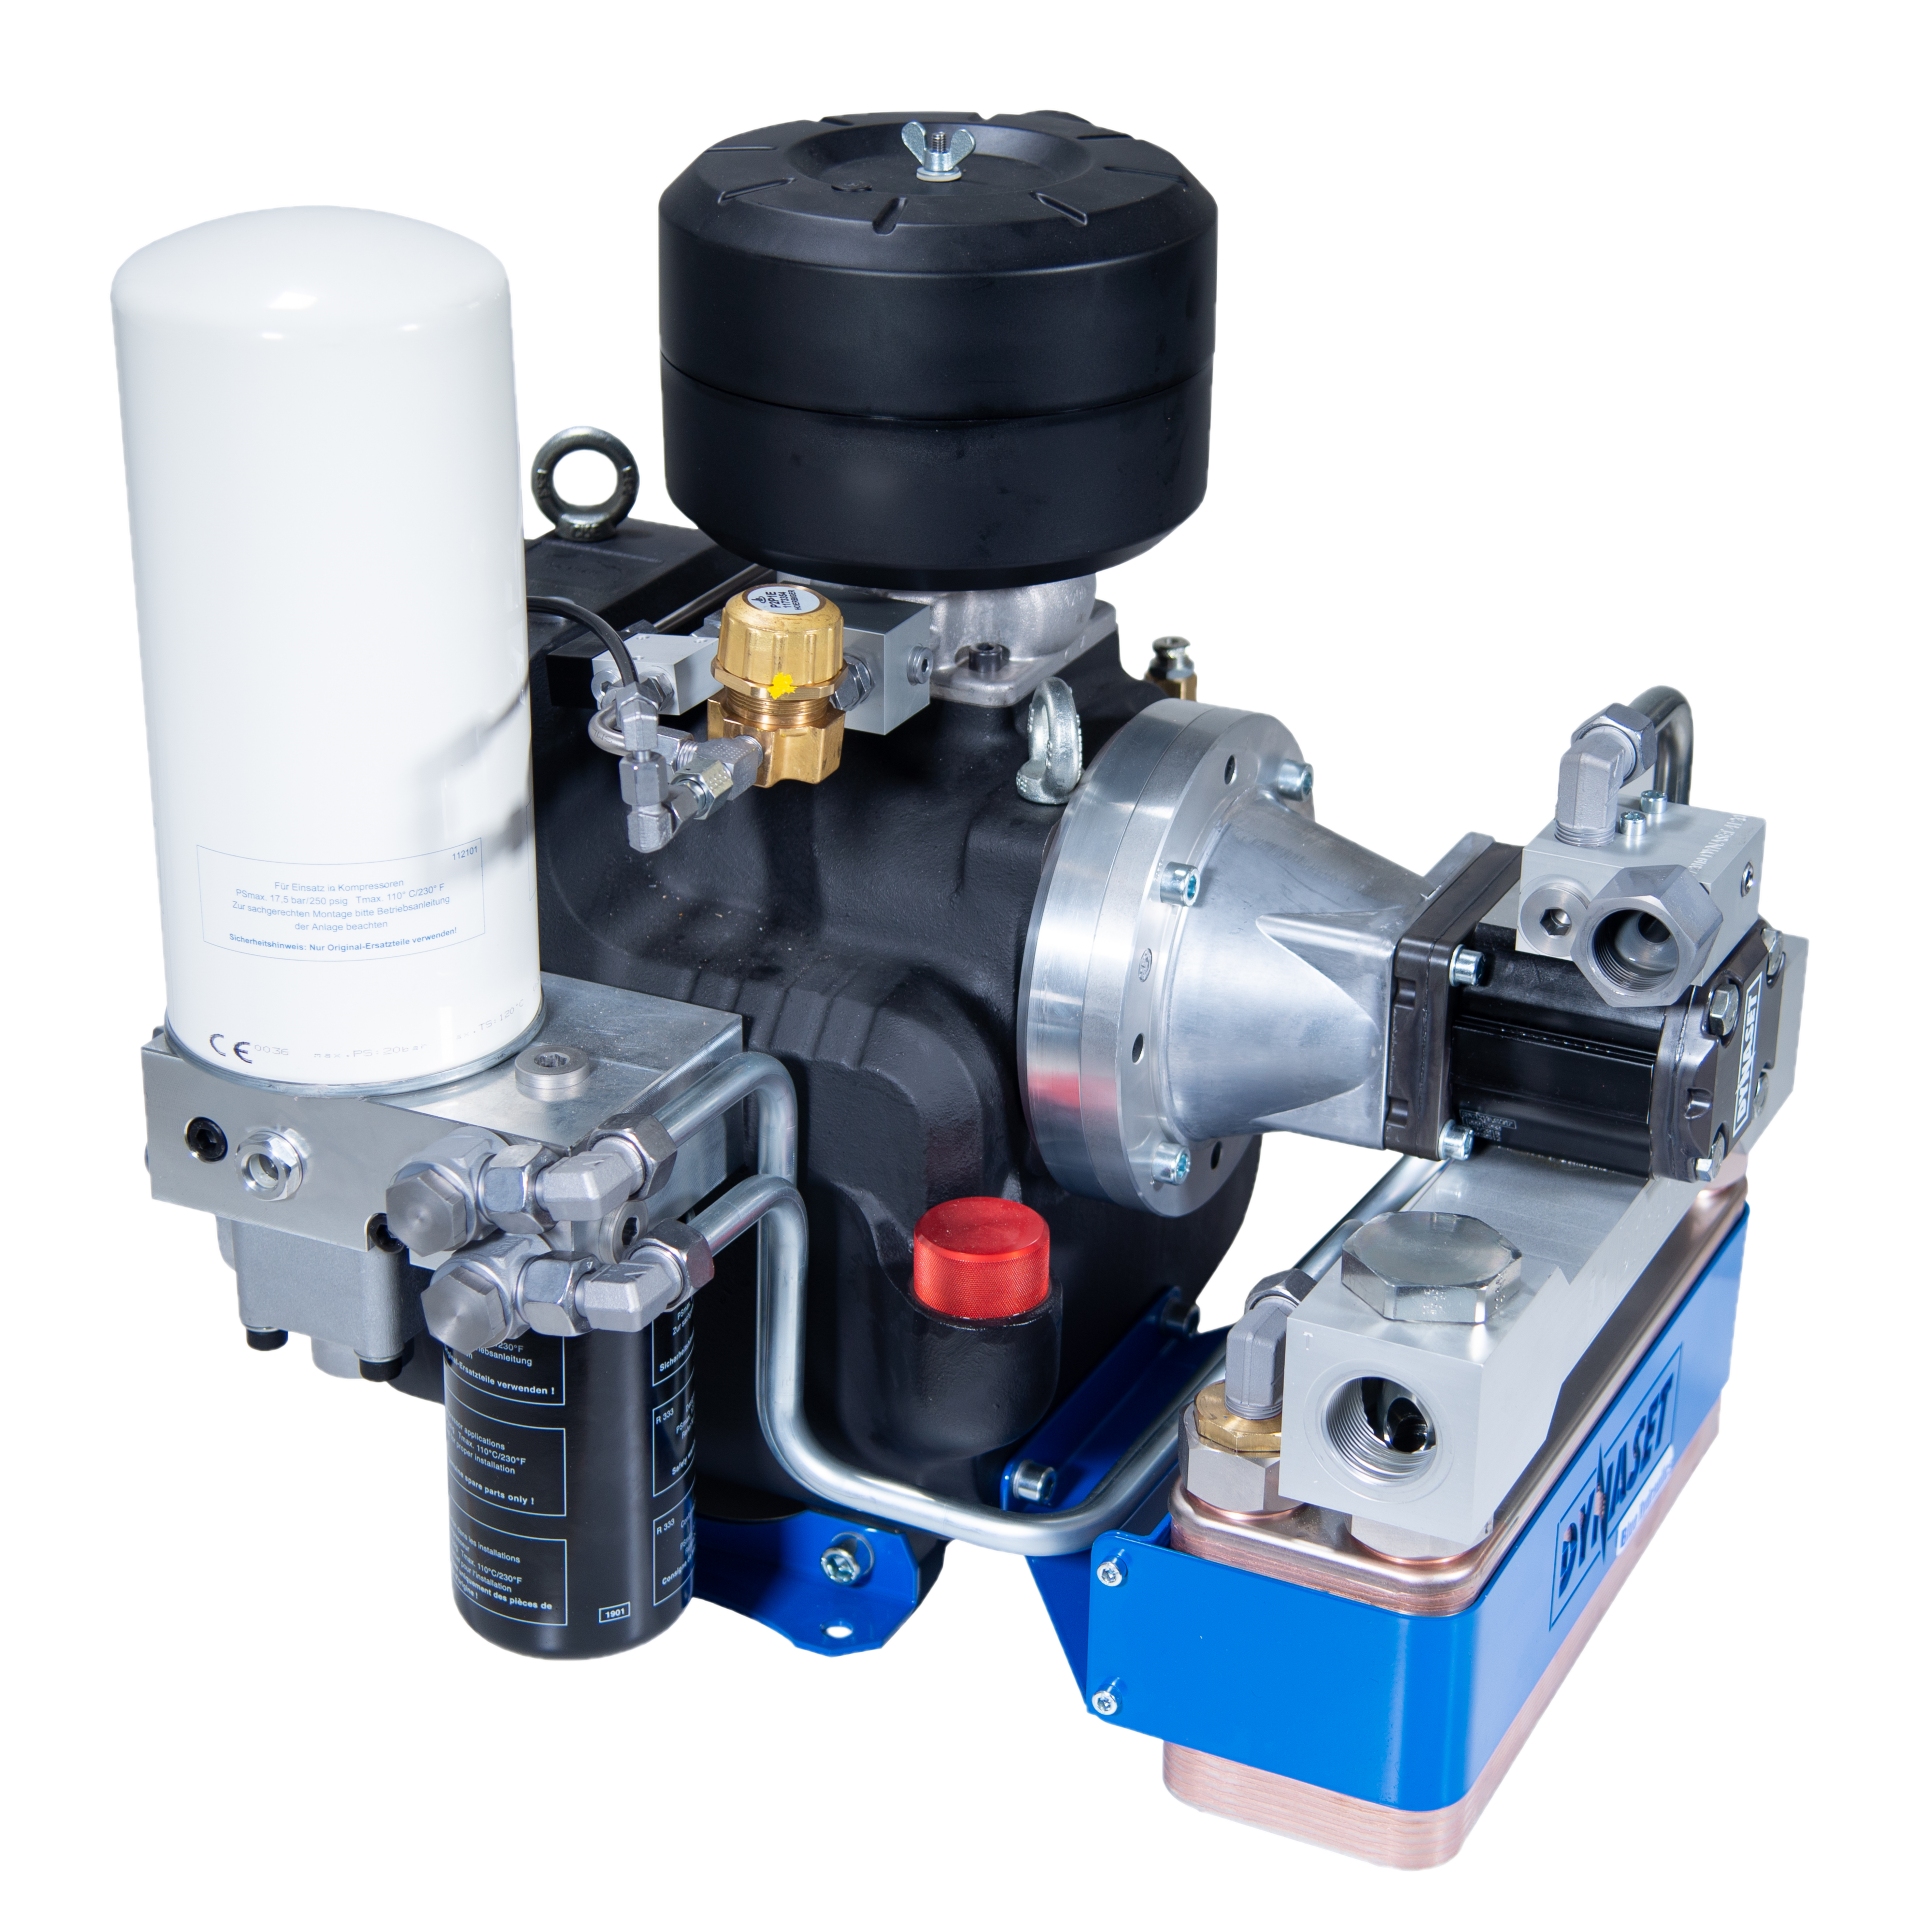 HKR4000 - Hydraulically driven compressed air screw compressor 4,000 L/min. at max. 10 bar (145 PSI)